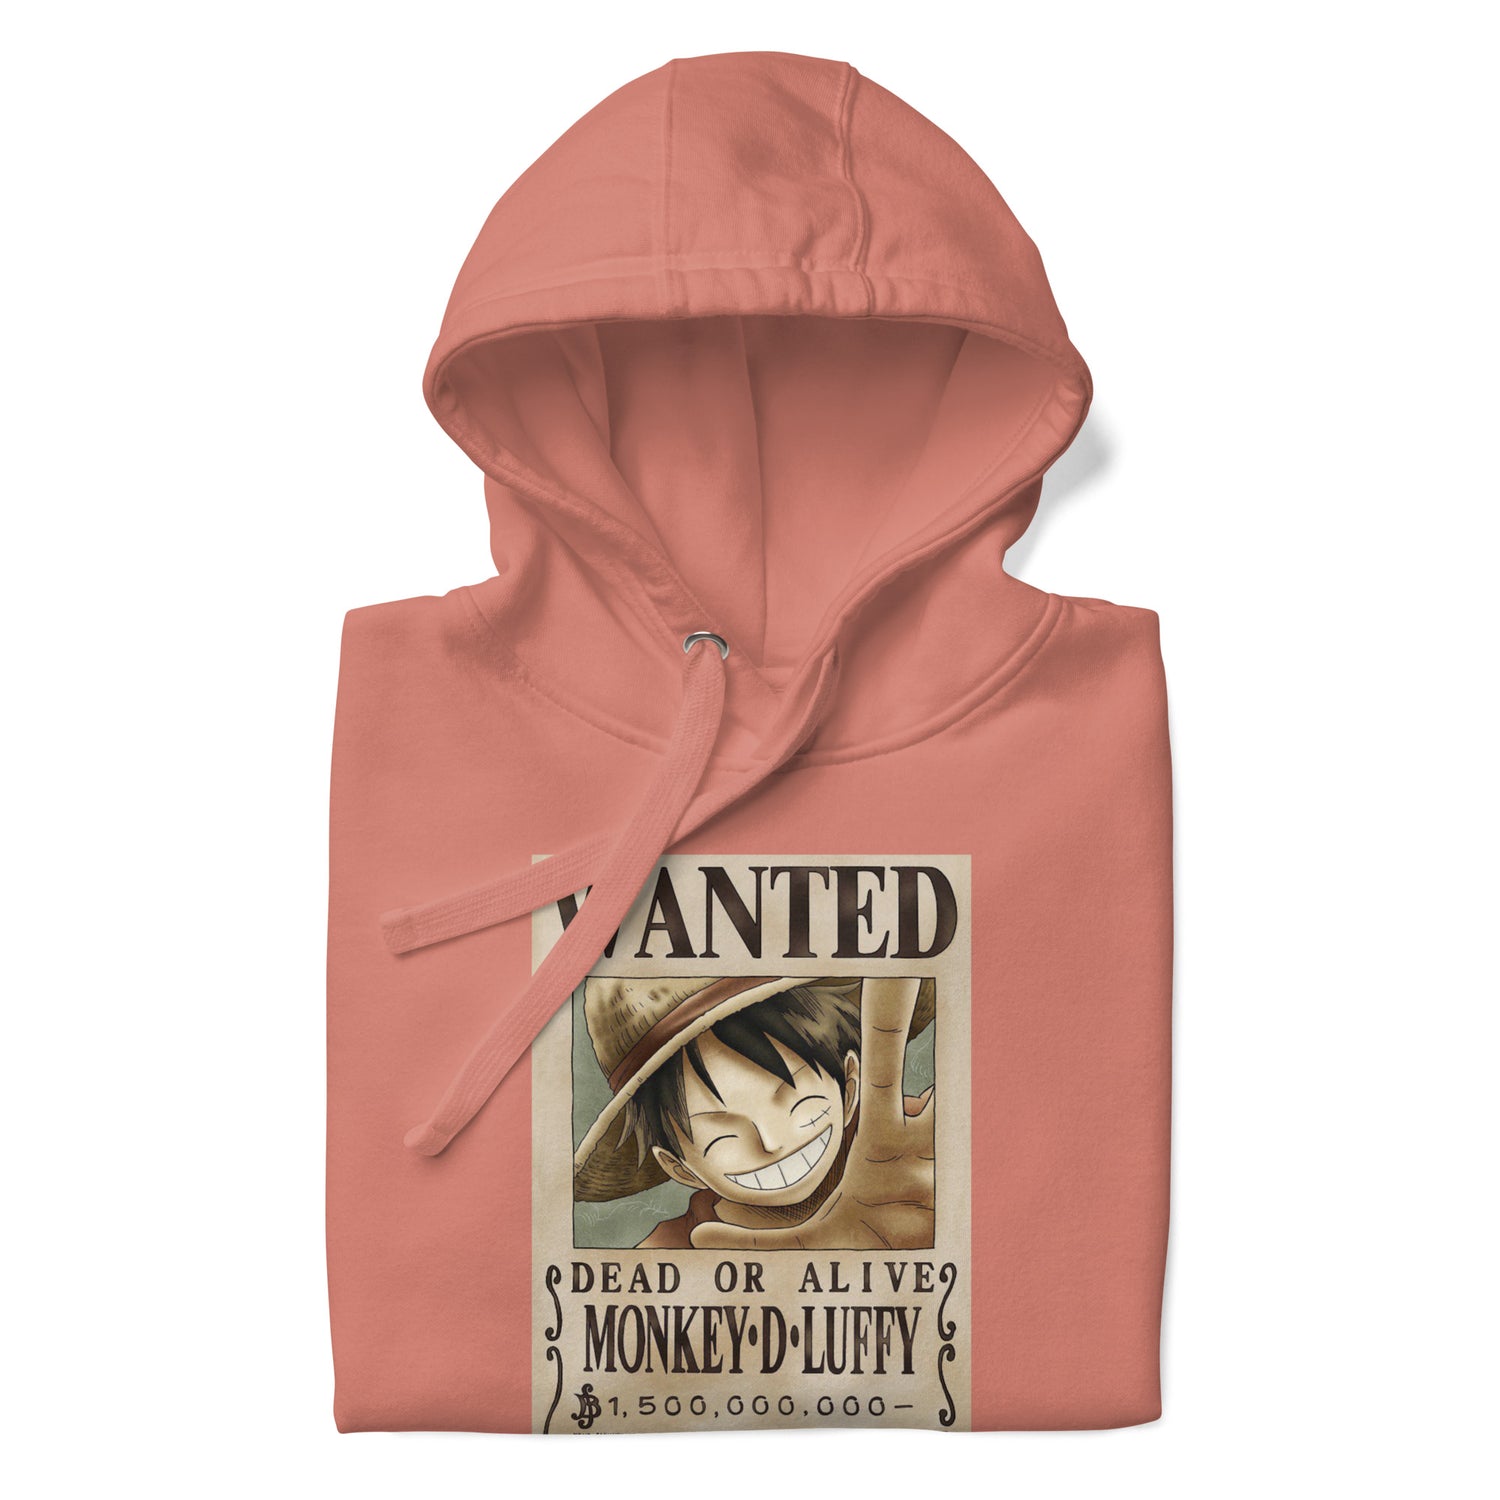 One Piece Monkey D. Luffy Straw Hat Pirates Wanted Poster Printed Premium Streetwear Hoodie Sweatshirt Salmon Pink